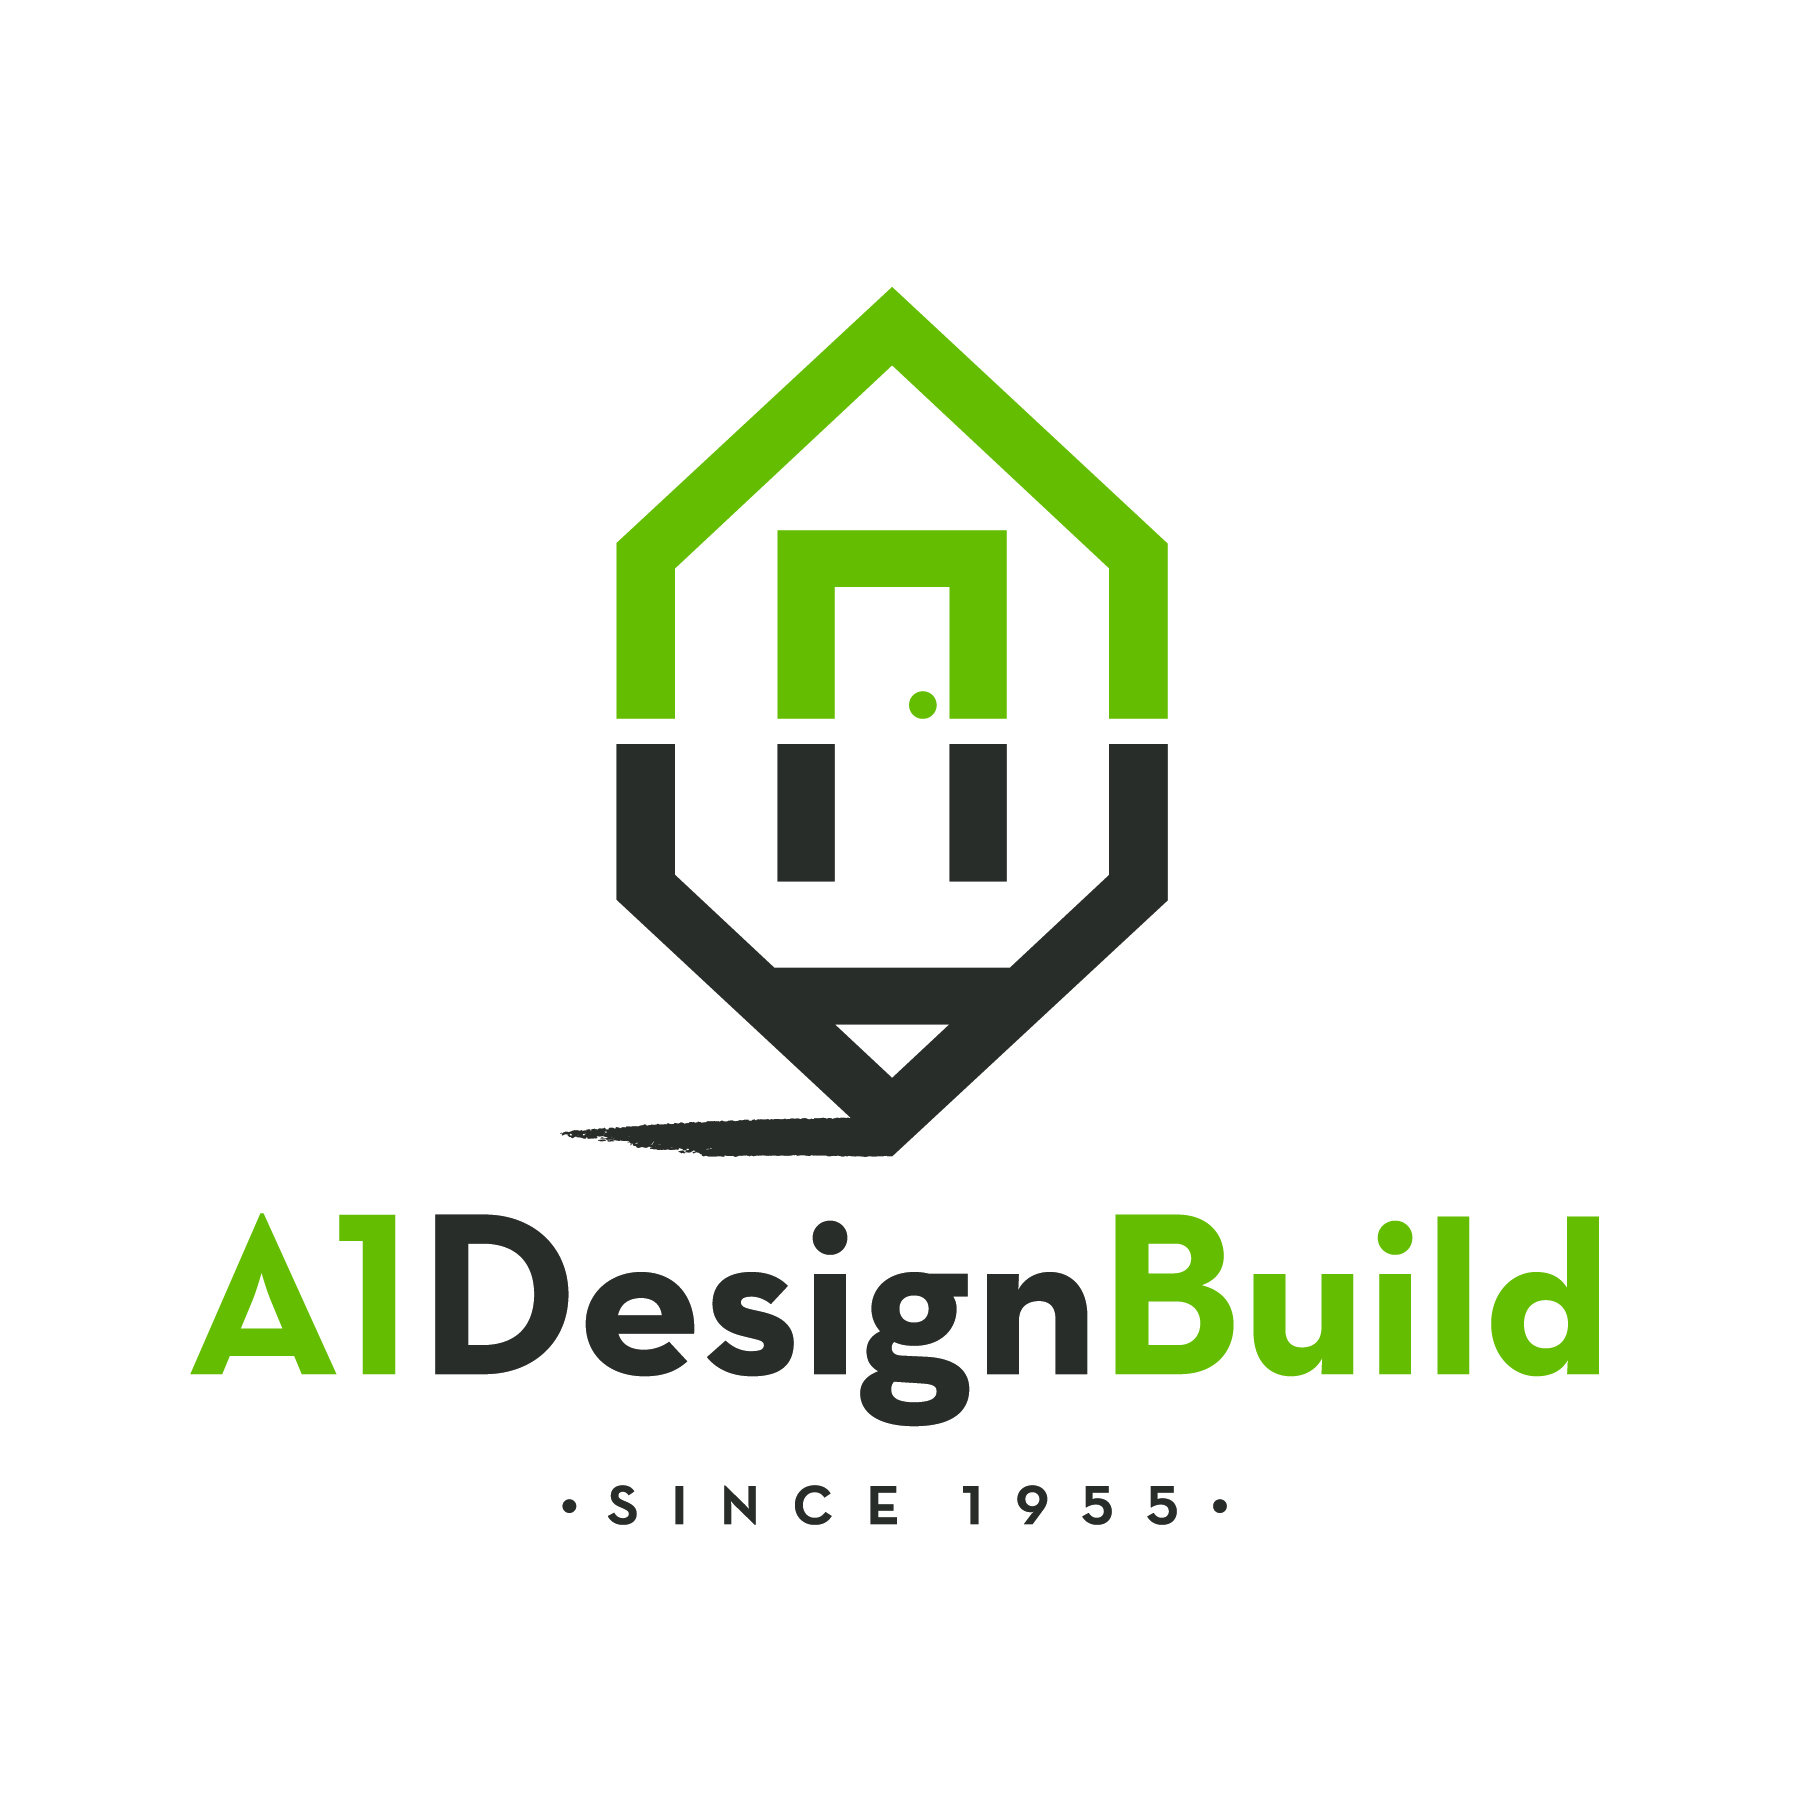 A1DesignBuild company logo